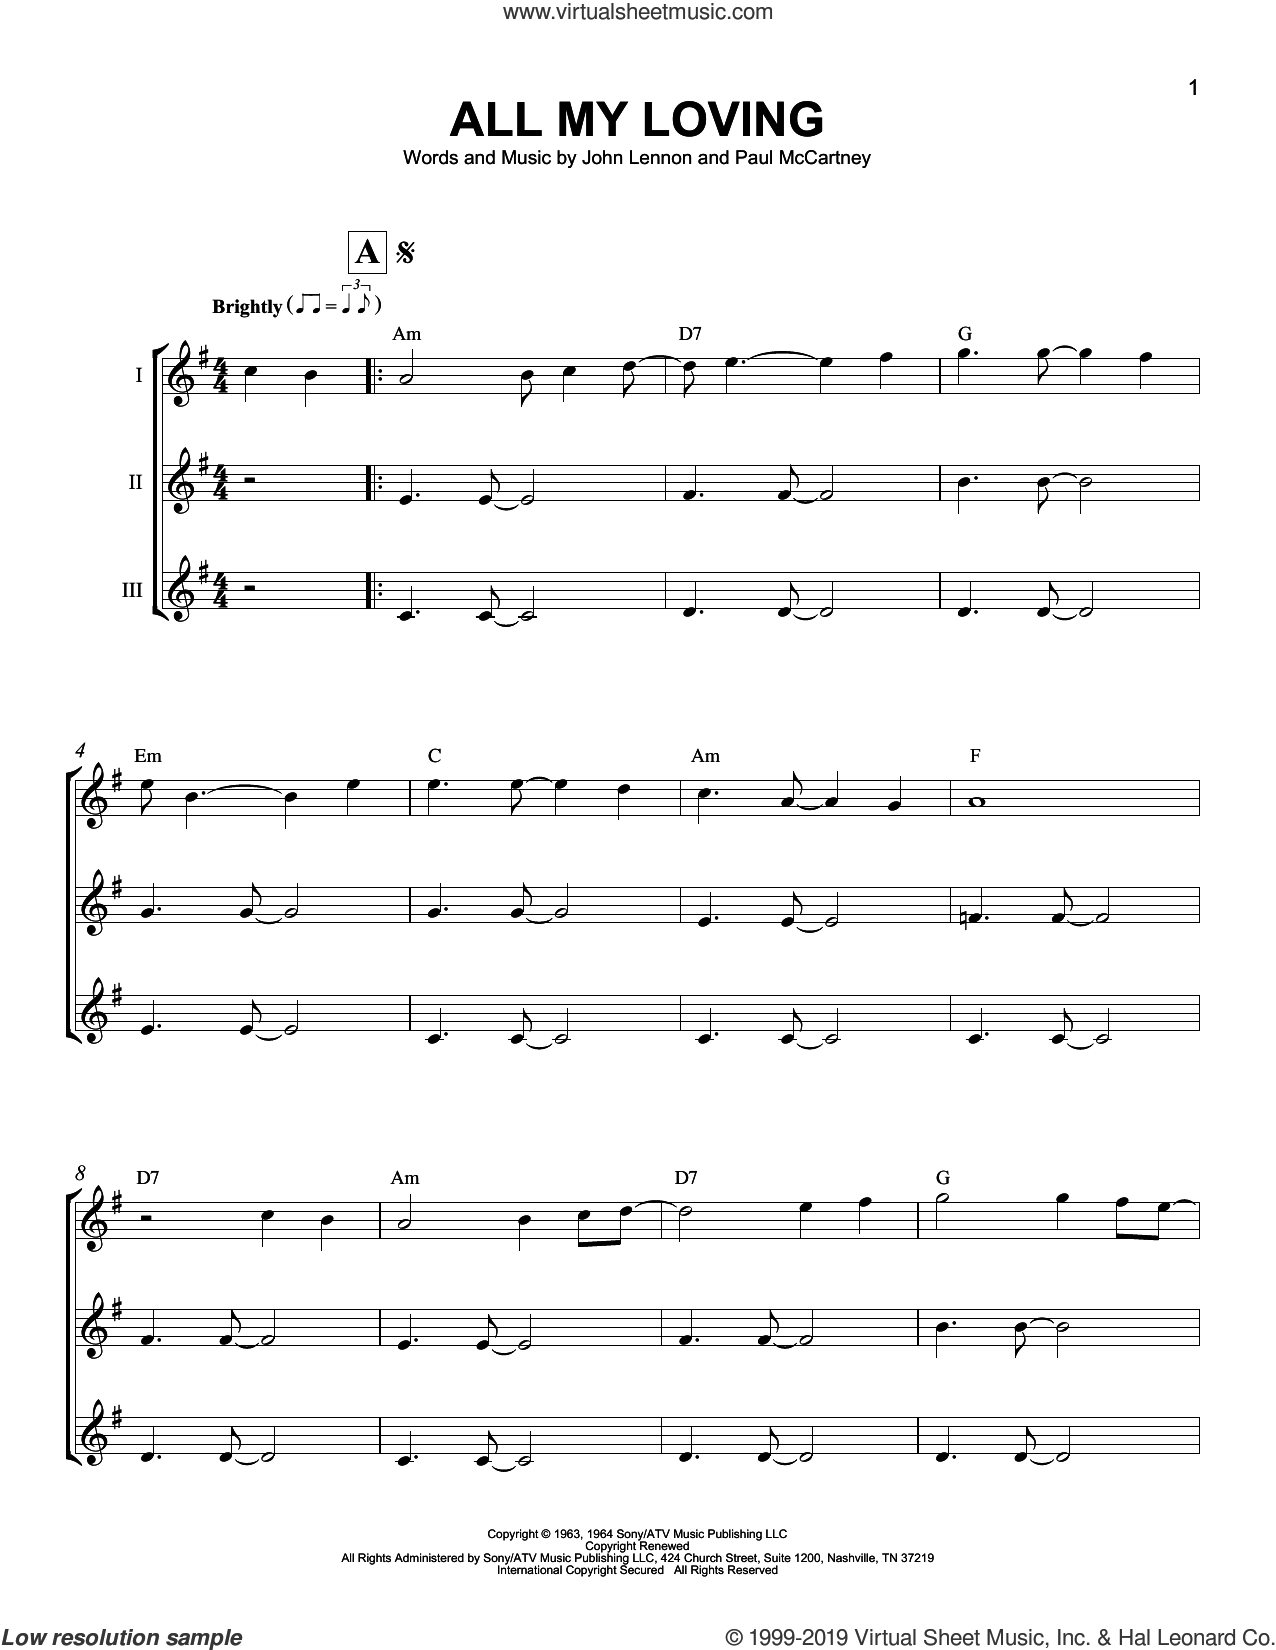 All My Loving sheet for ensemble (PDF)